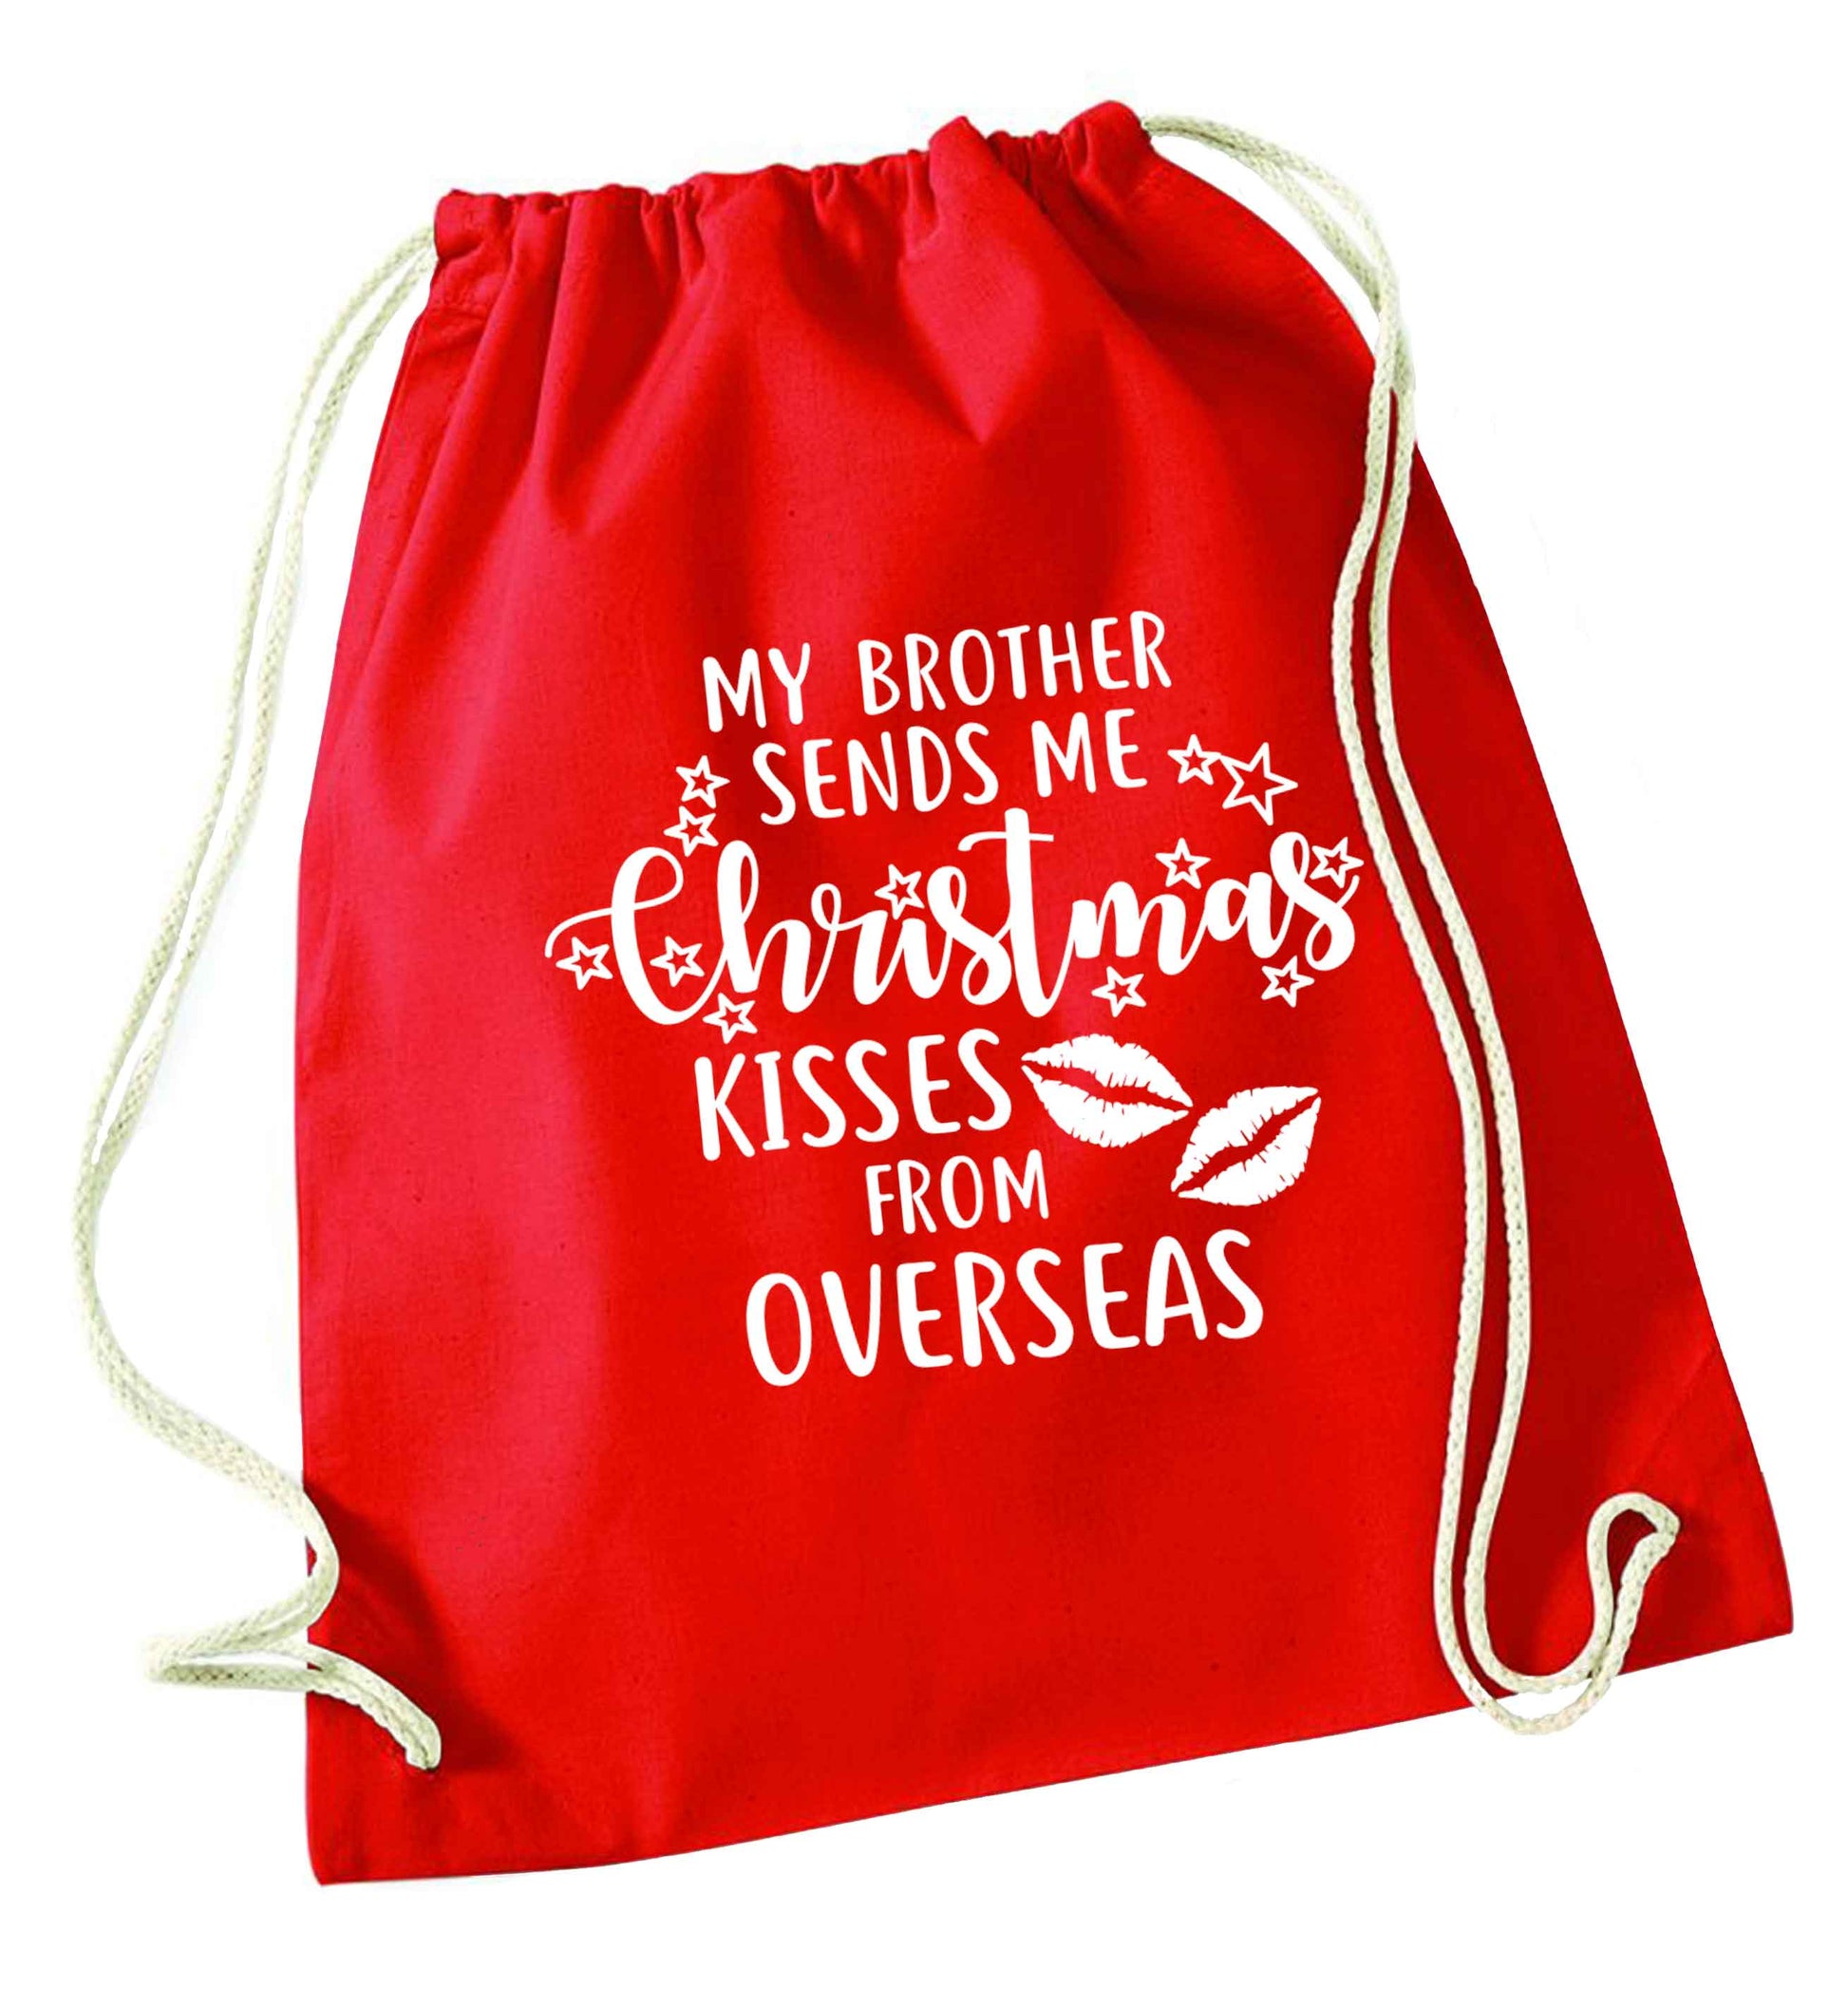 Brother Christmas Kisses Overseas red drawstring bag 